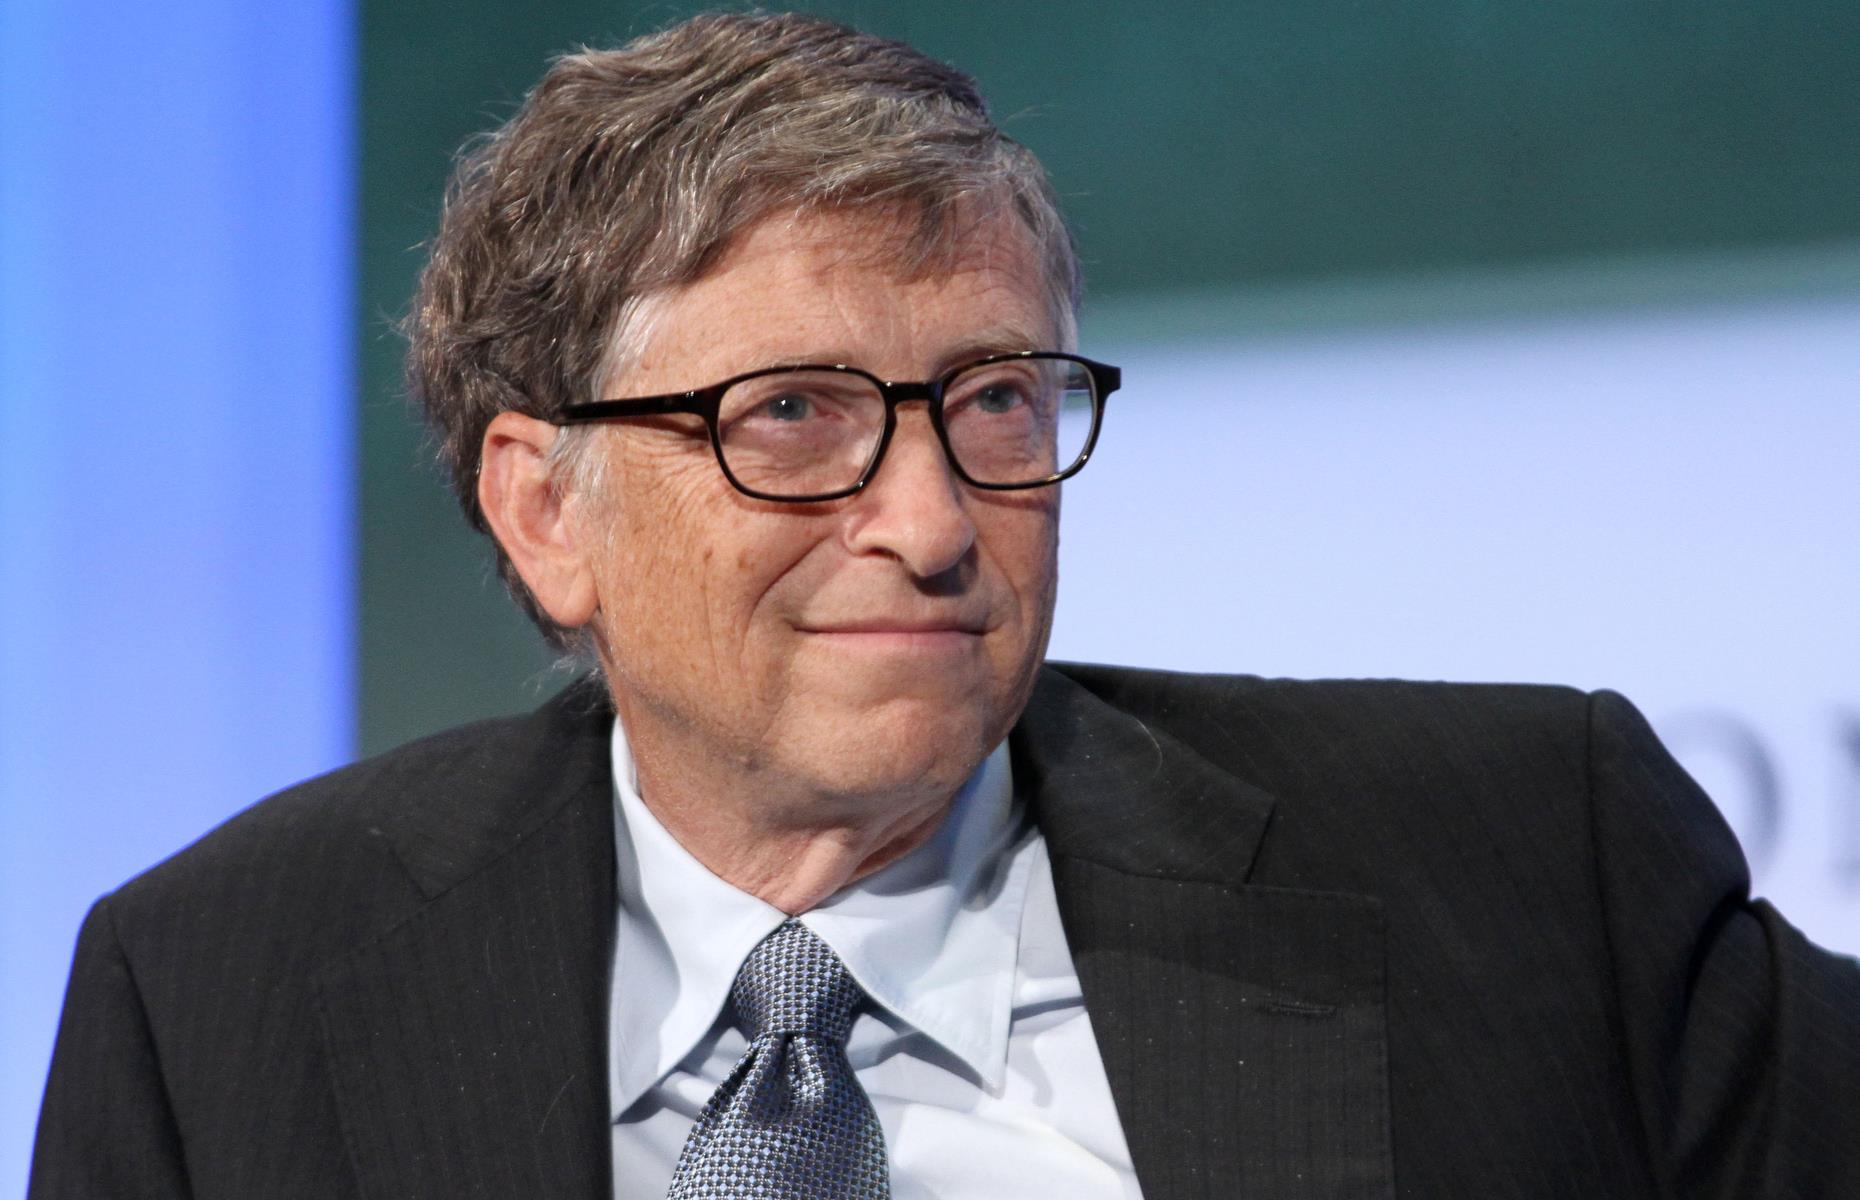 Spanx Founder Sarah Blakely Takes Bill Gates Pledge, to Donate